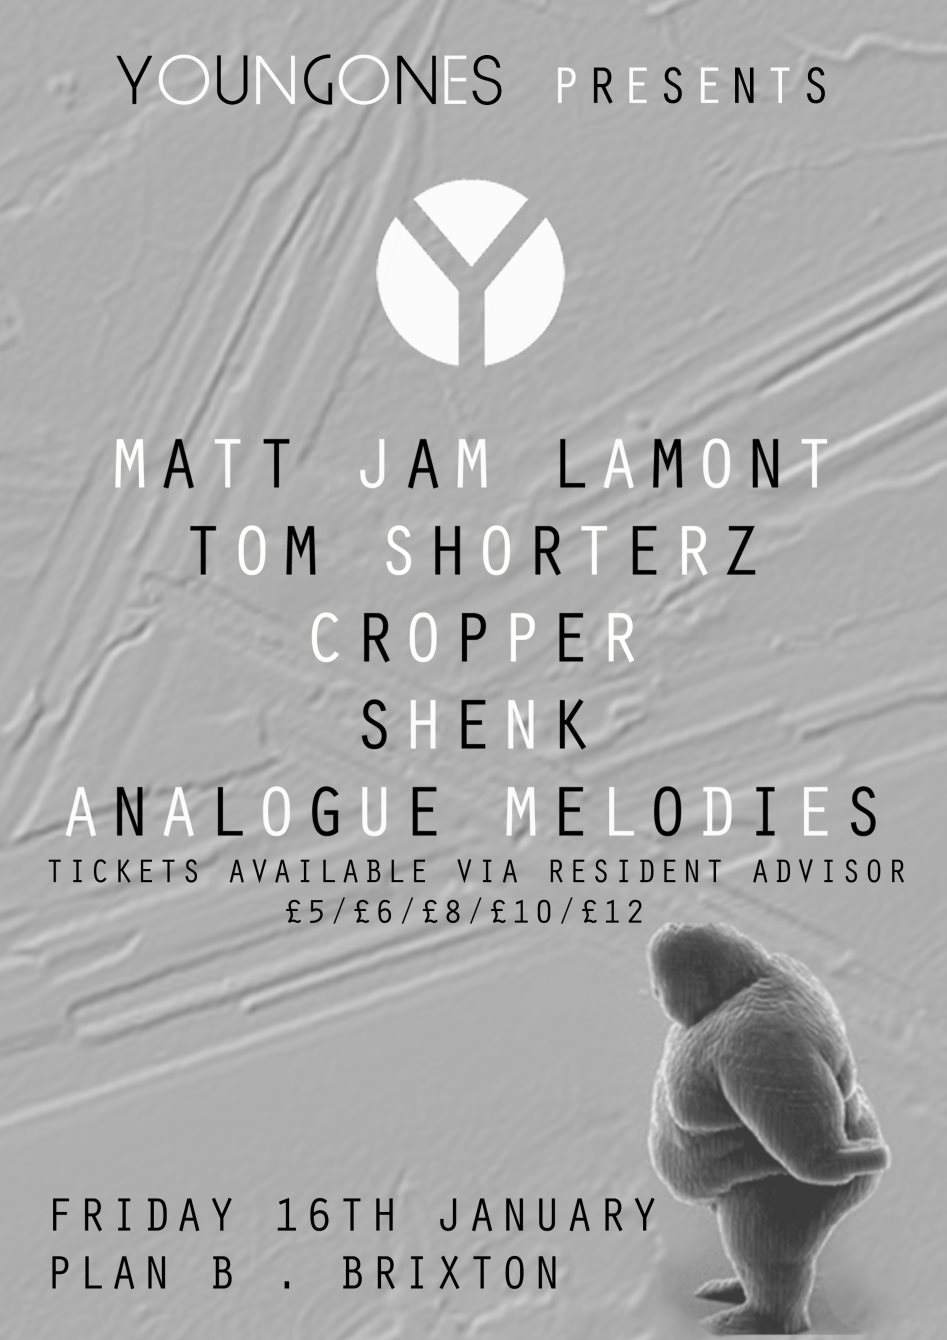 Youngones presents: Matt Jam Lamont, Tom Shorterz, Cropper, Shenk, Analogue Melodies - Flyer back